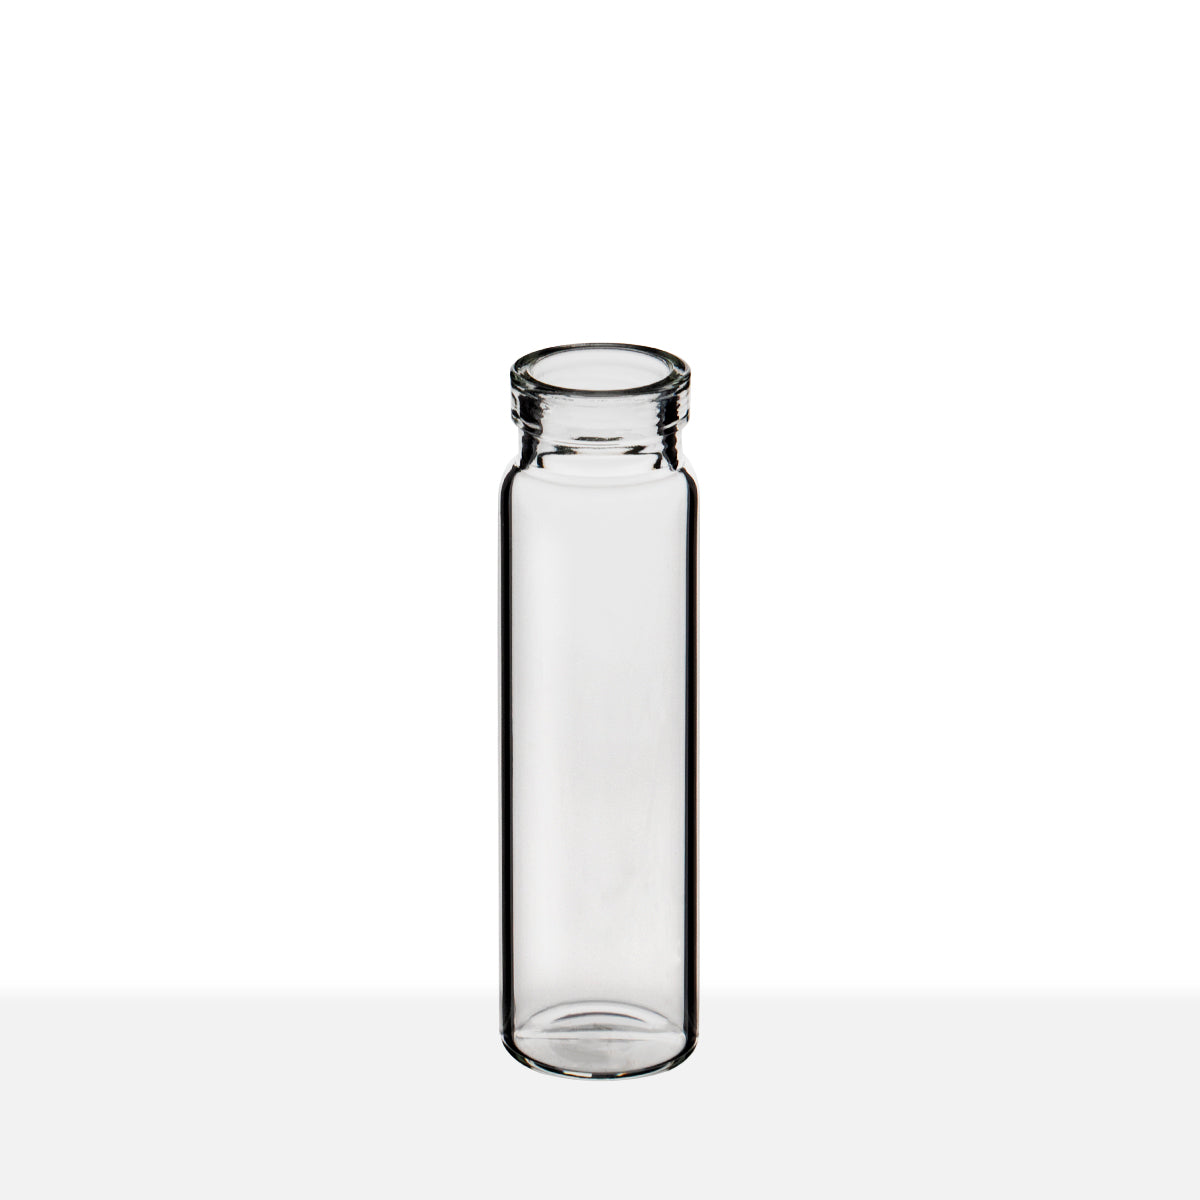 PATENT LIP GLASS VIALS - CLEAR Item #:VCPC1965